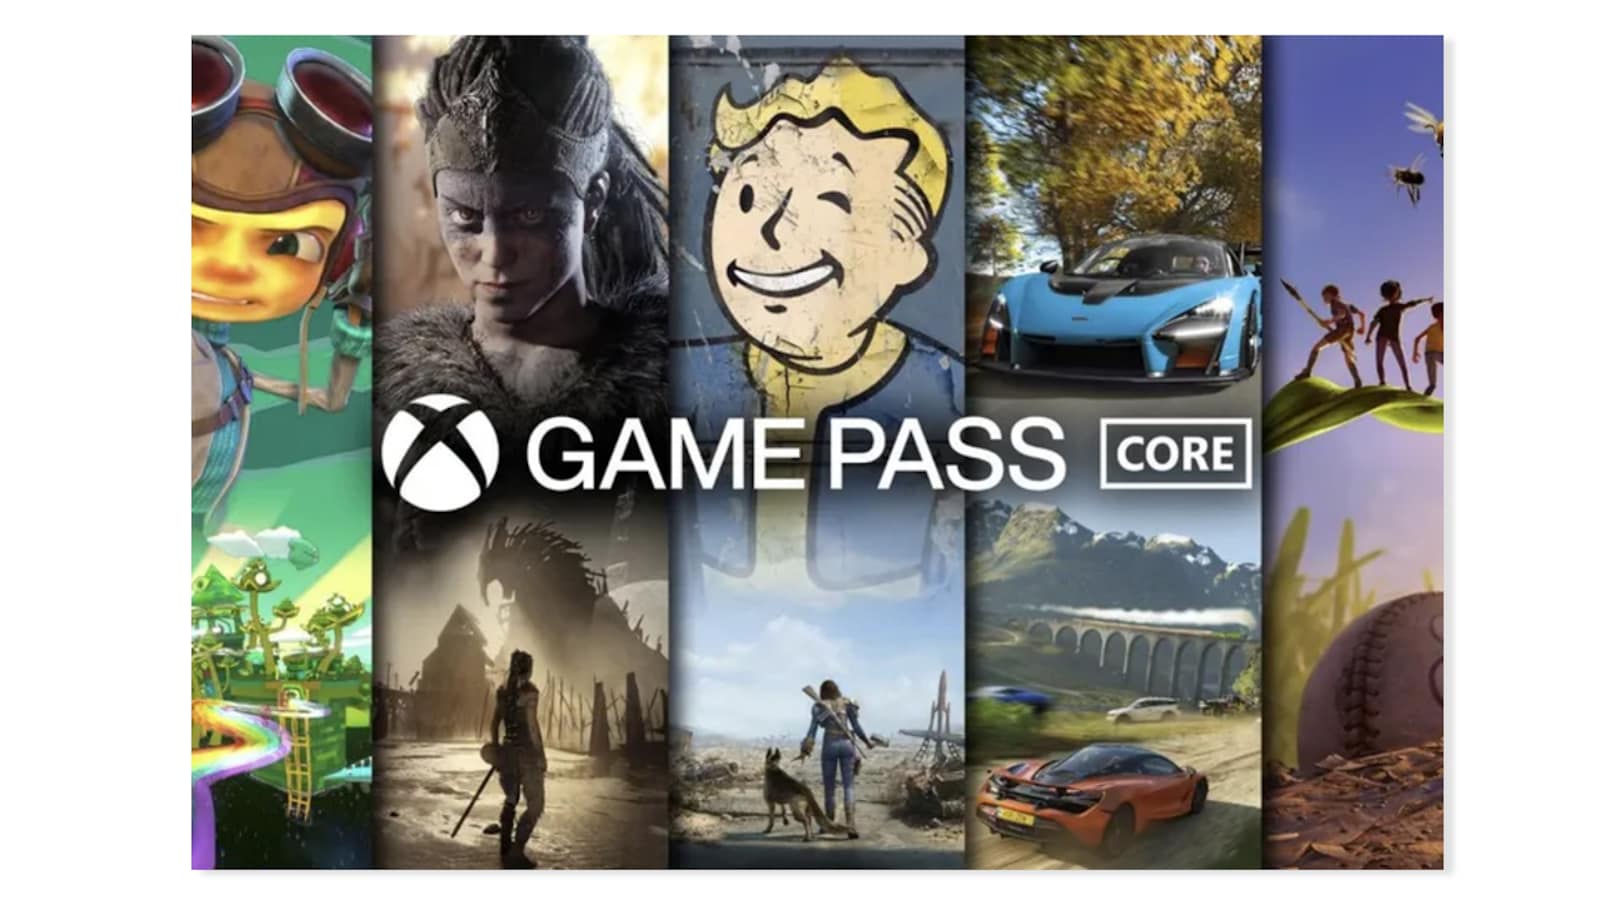 Xbox divulga lista completa de jogos do Game Pass Core